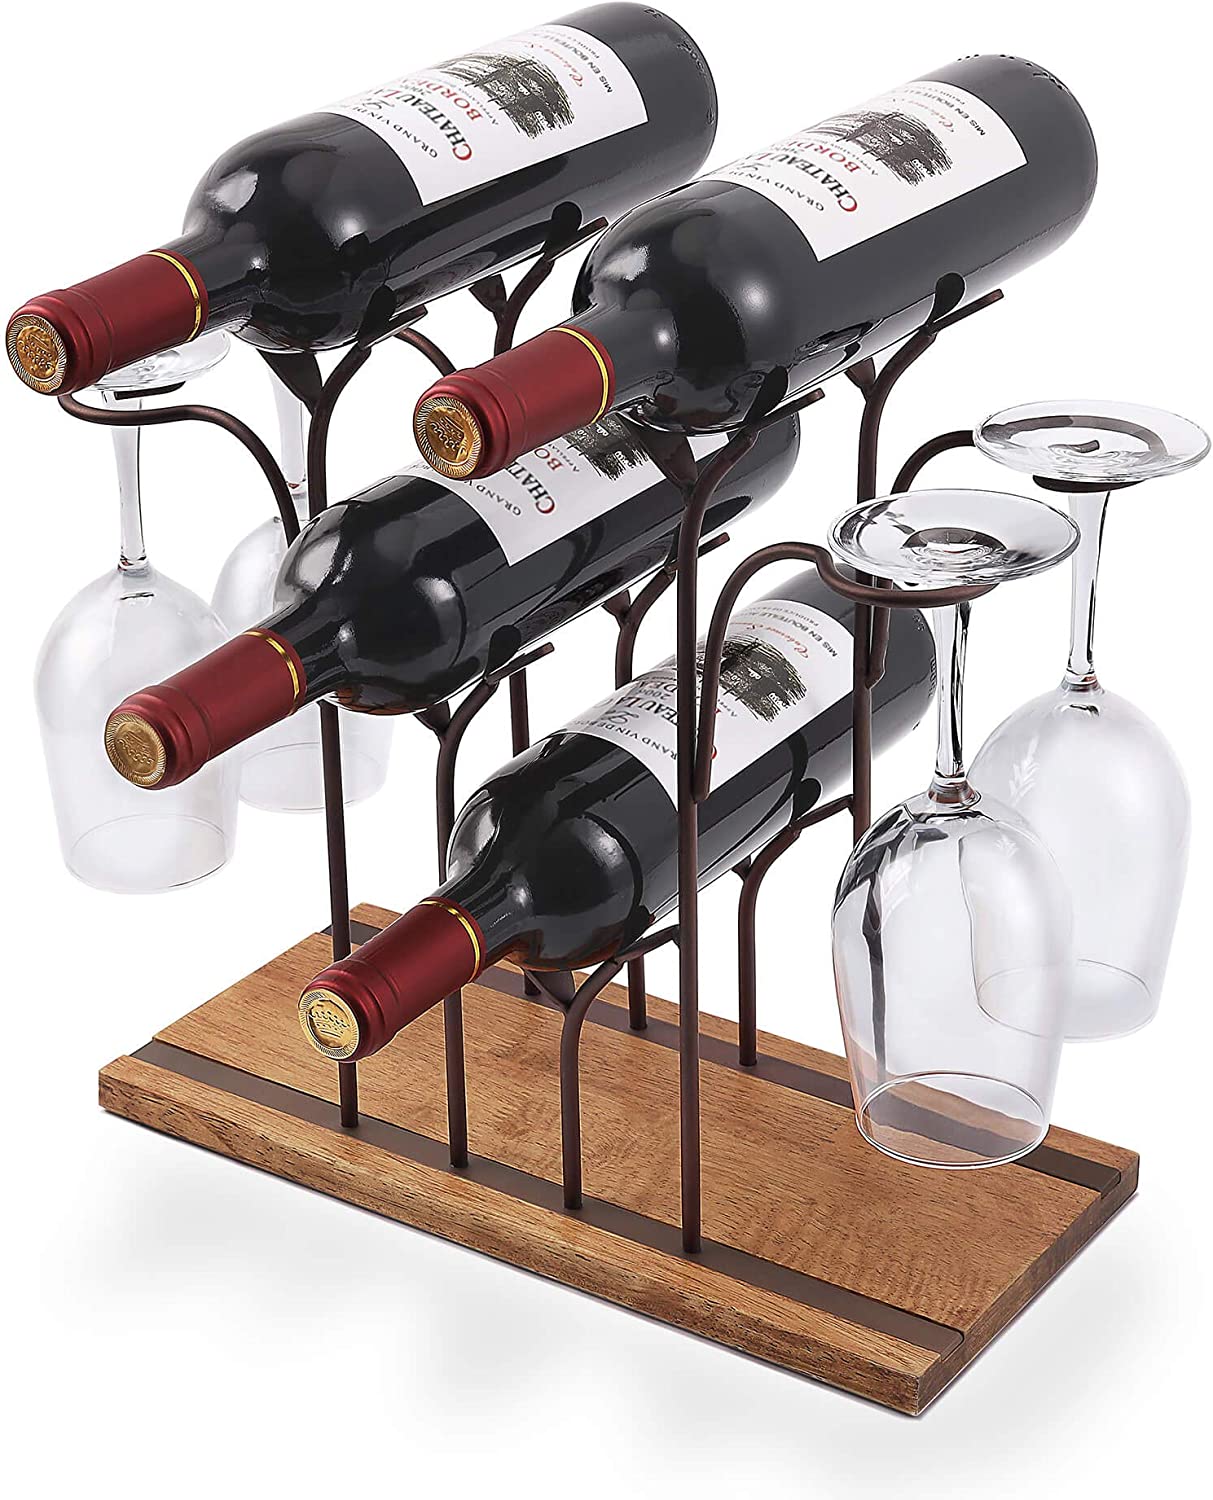 Tabletop Wood Wine Holder, Countertop Wine Rack, Hold 4 Wine Bottles a –  TreeLen